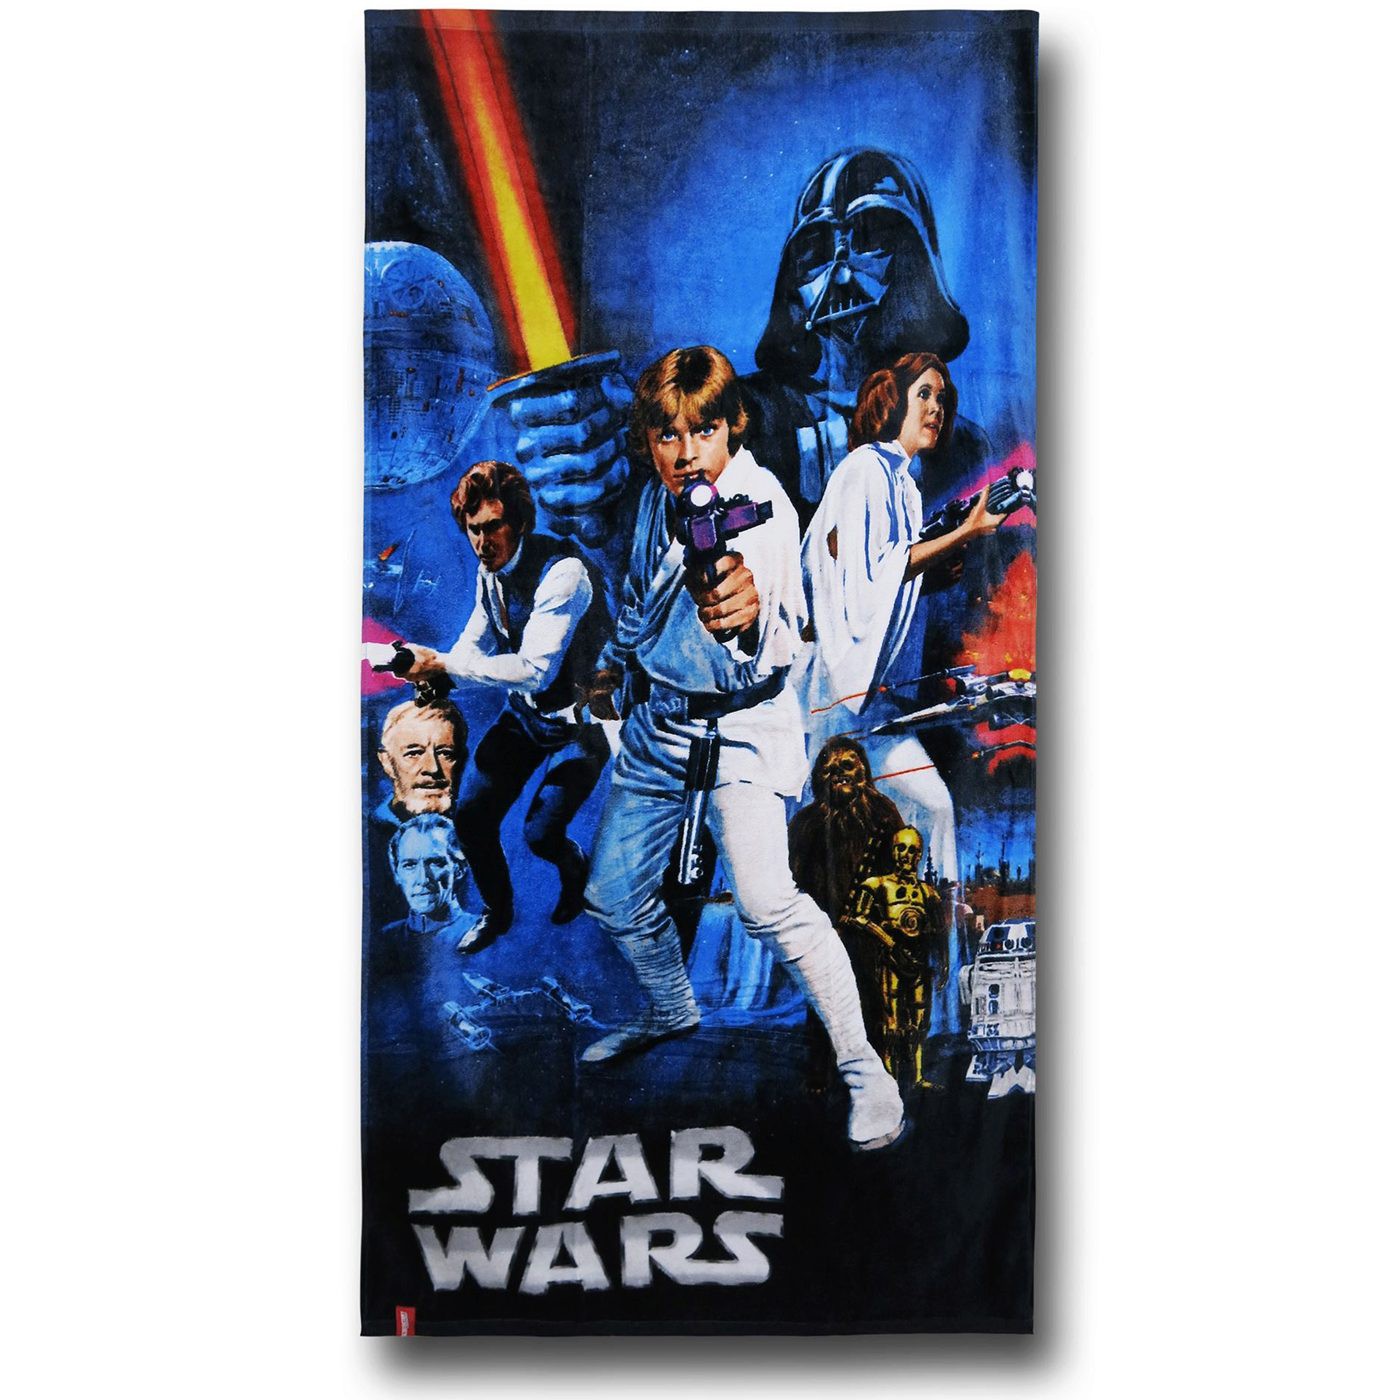 Star Wars New Hope Poster Towel